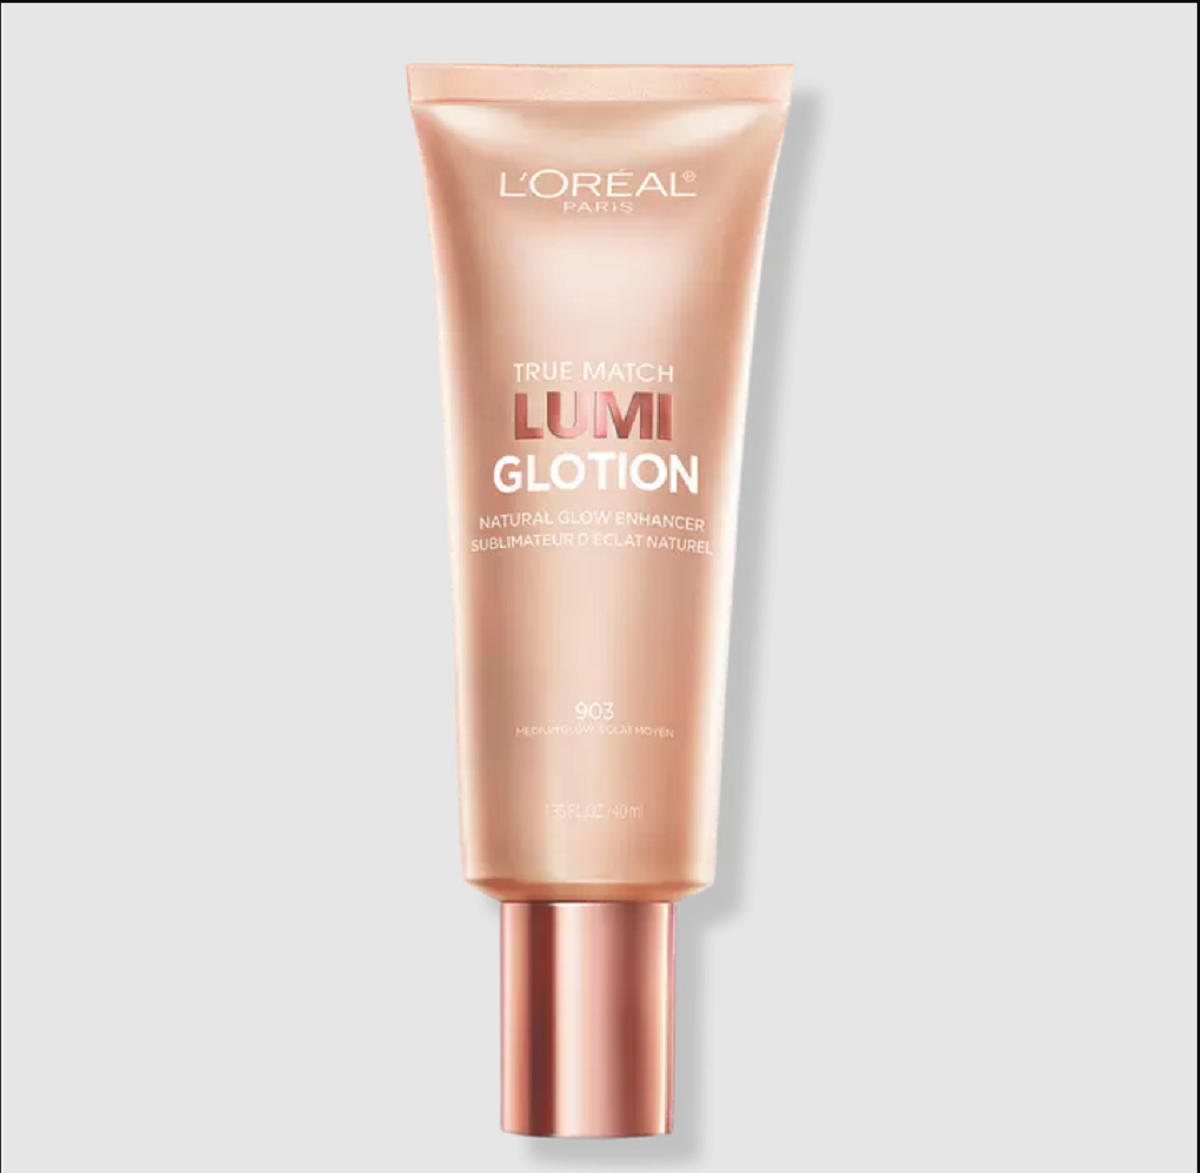 L'Oréal True Match Lumi Glotion Natural Glow Enhancer, L'Oreal Face Makeup